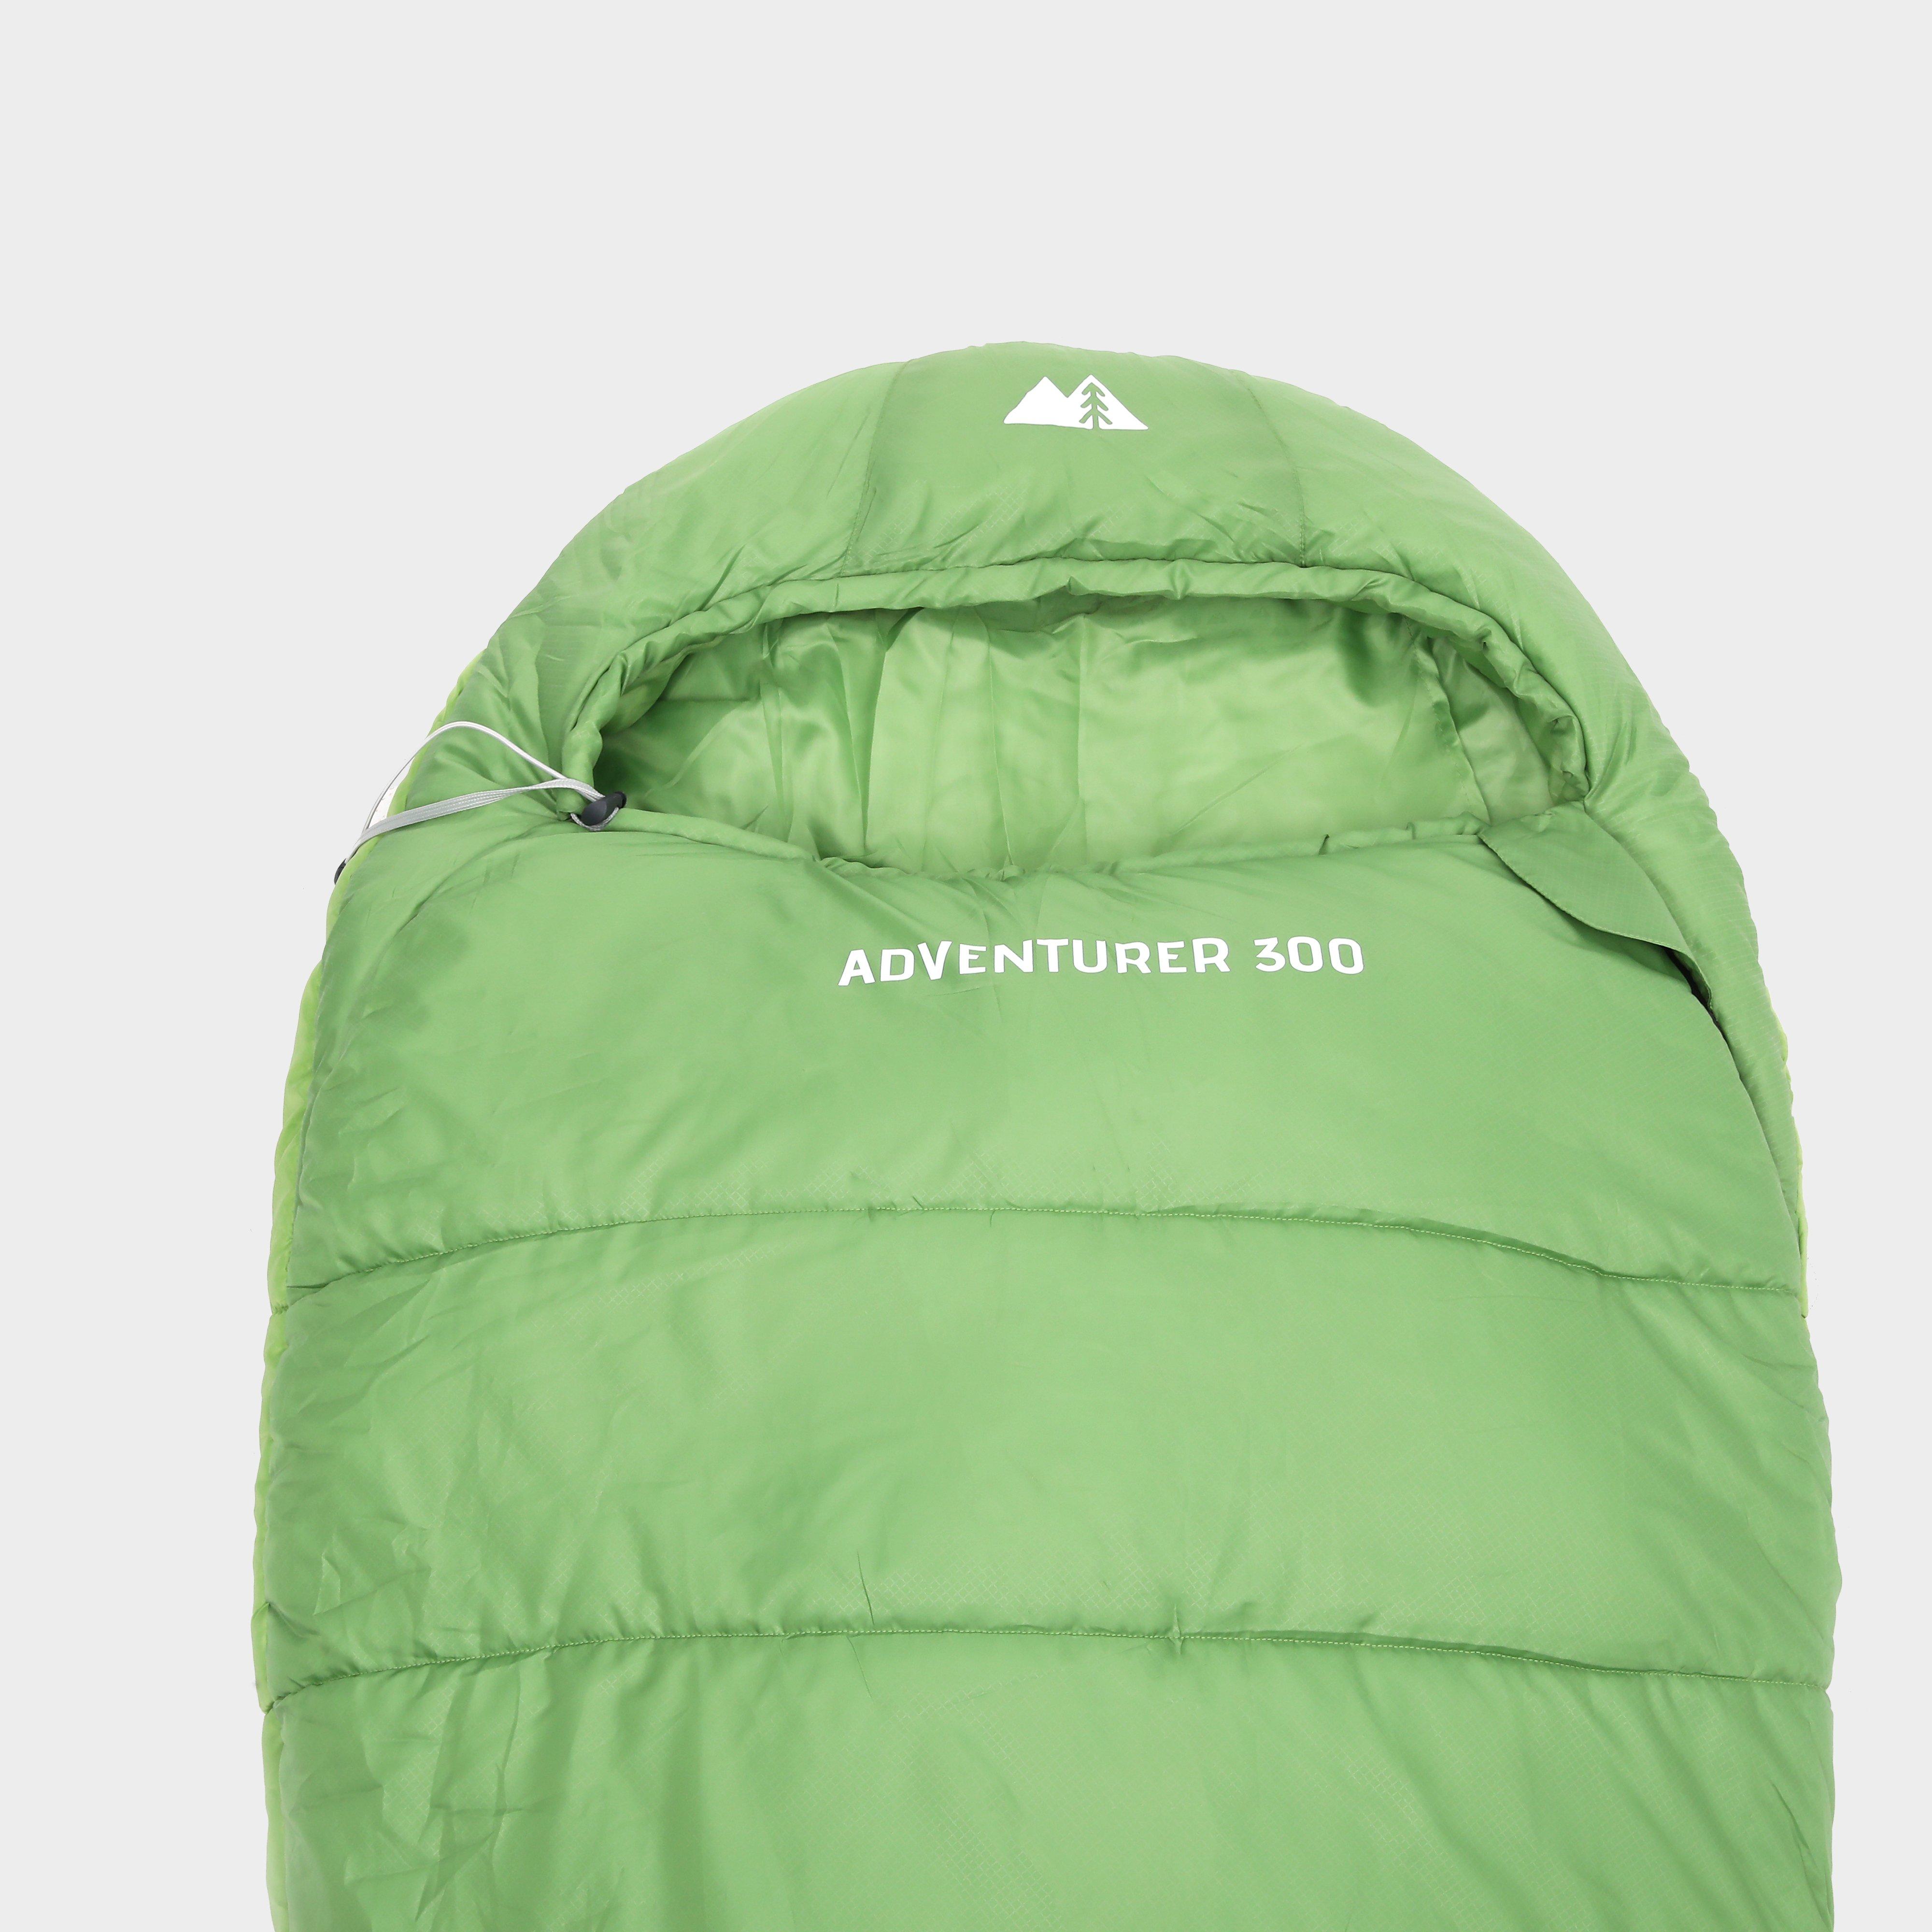  Eurohike Adventurer 300 Sleeping Bag, Green